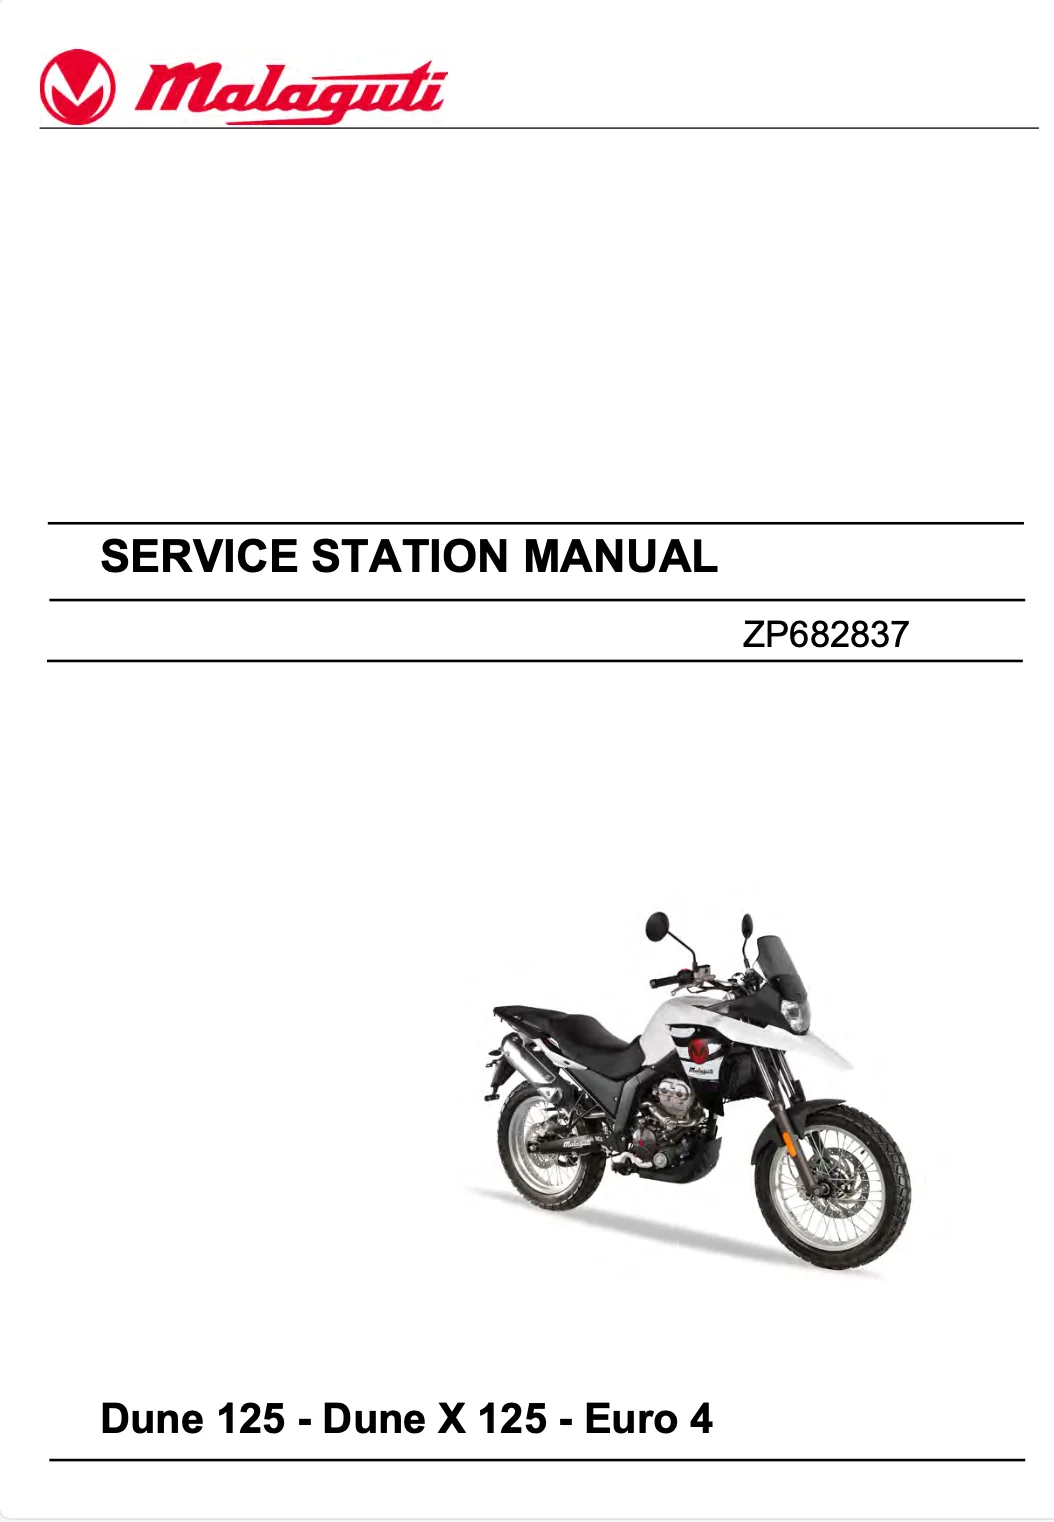 Malaguti Dune X125 Euro 4 Service Manual models 2018 to 2020 original motorcycle manufacturer's PDF repair manual download